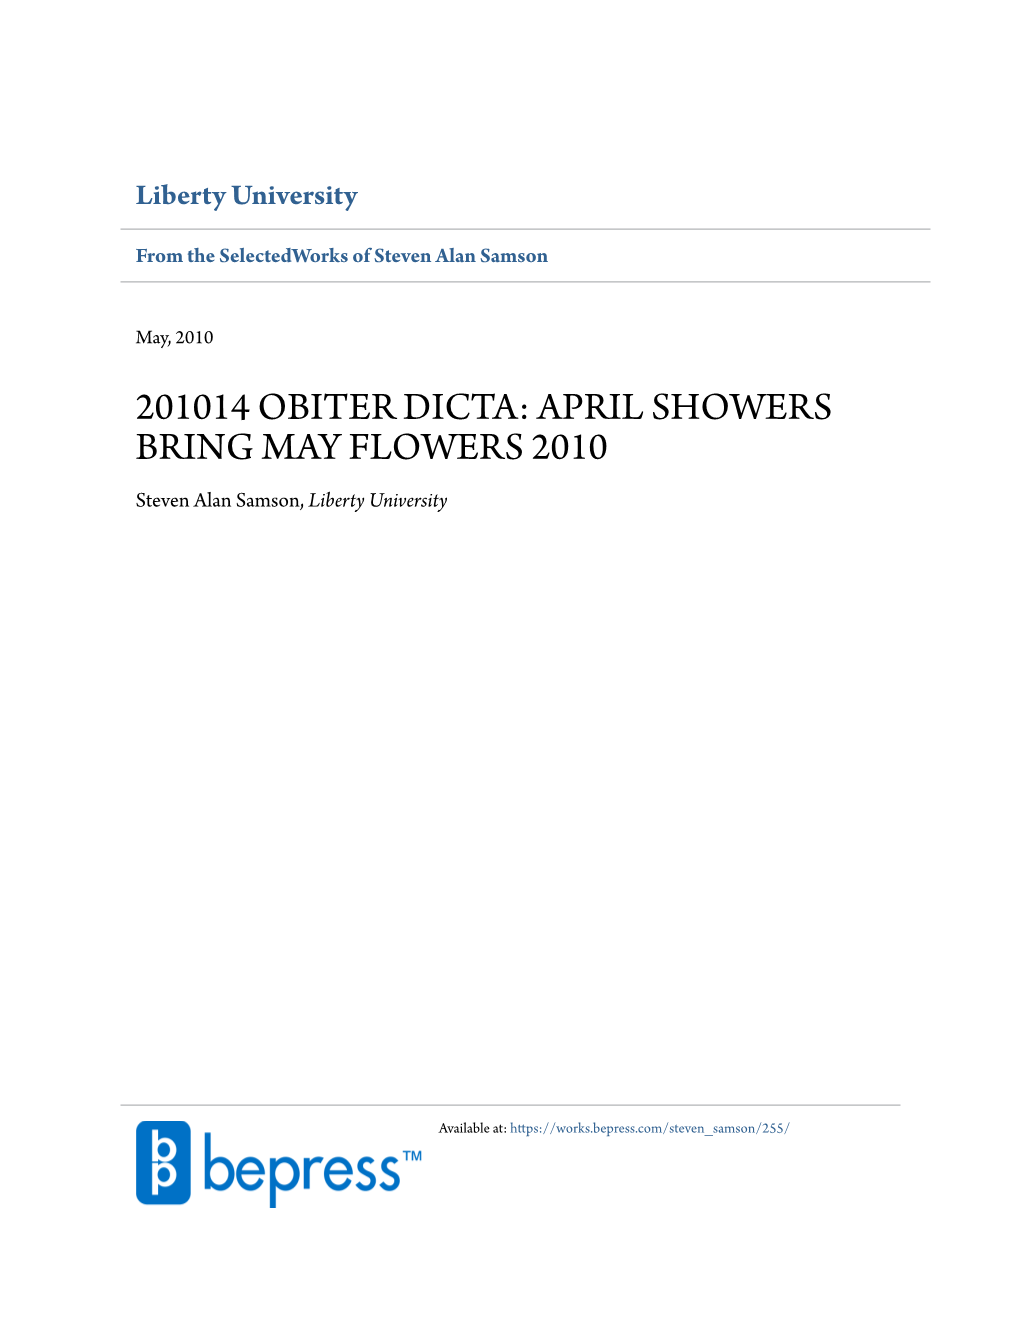 201014 OBITER DICTA: APRIL SHOWERS BRING MAY FLOWERS 2010 Steven Alan Samson, Liberty University